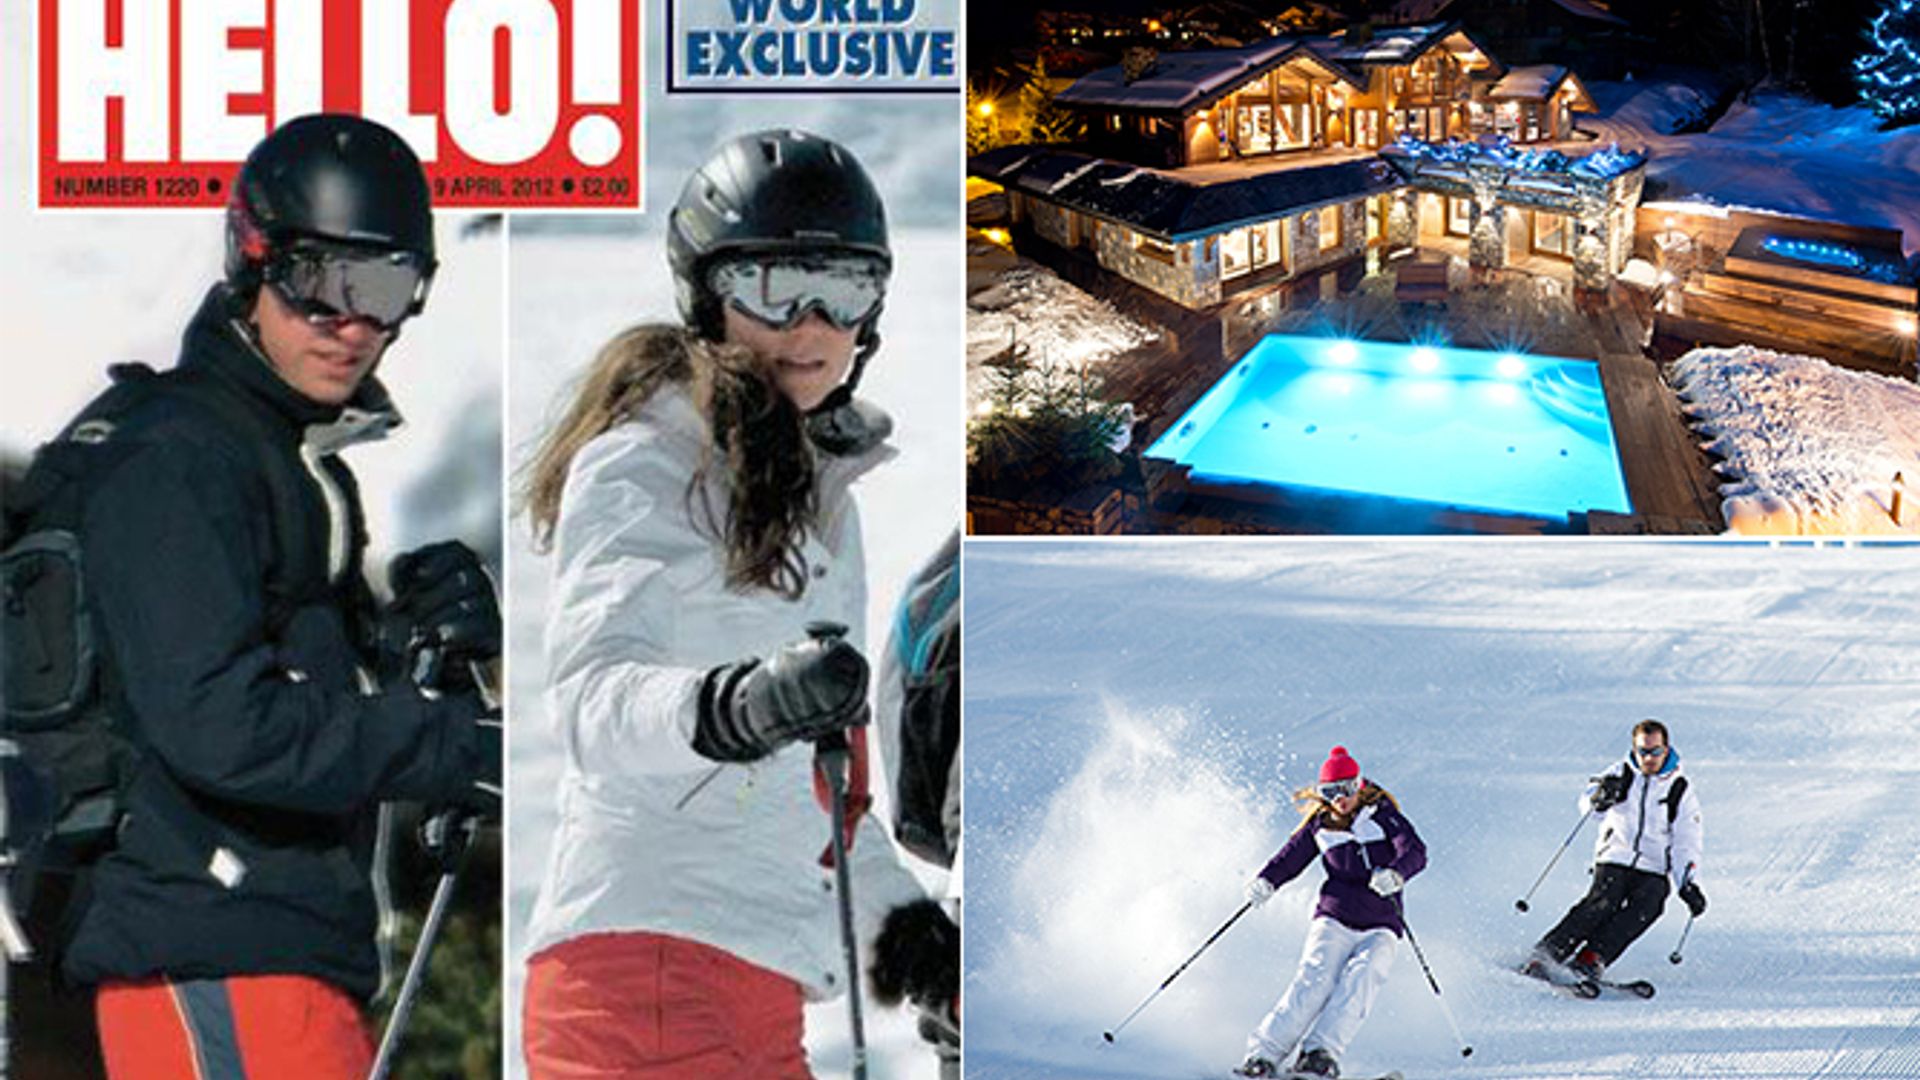 Méribel: Prince William and Duchess Kate's much-loved ski resort